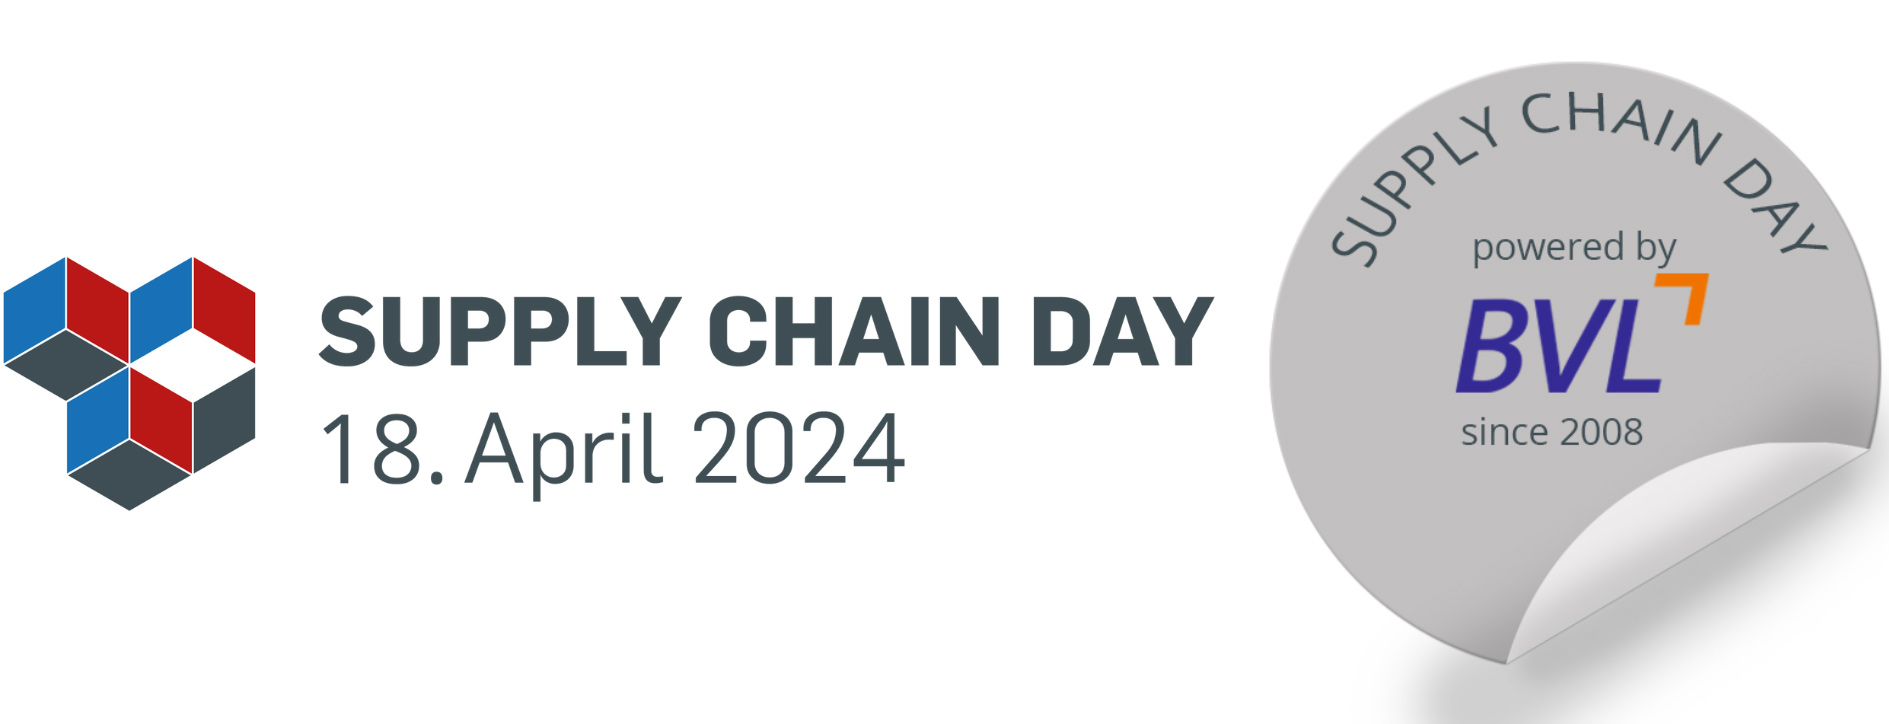 Supply Chain Day 2021